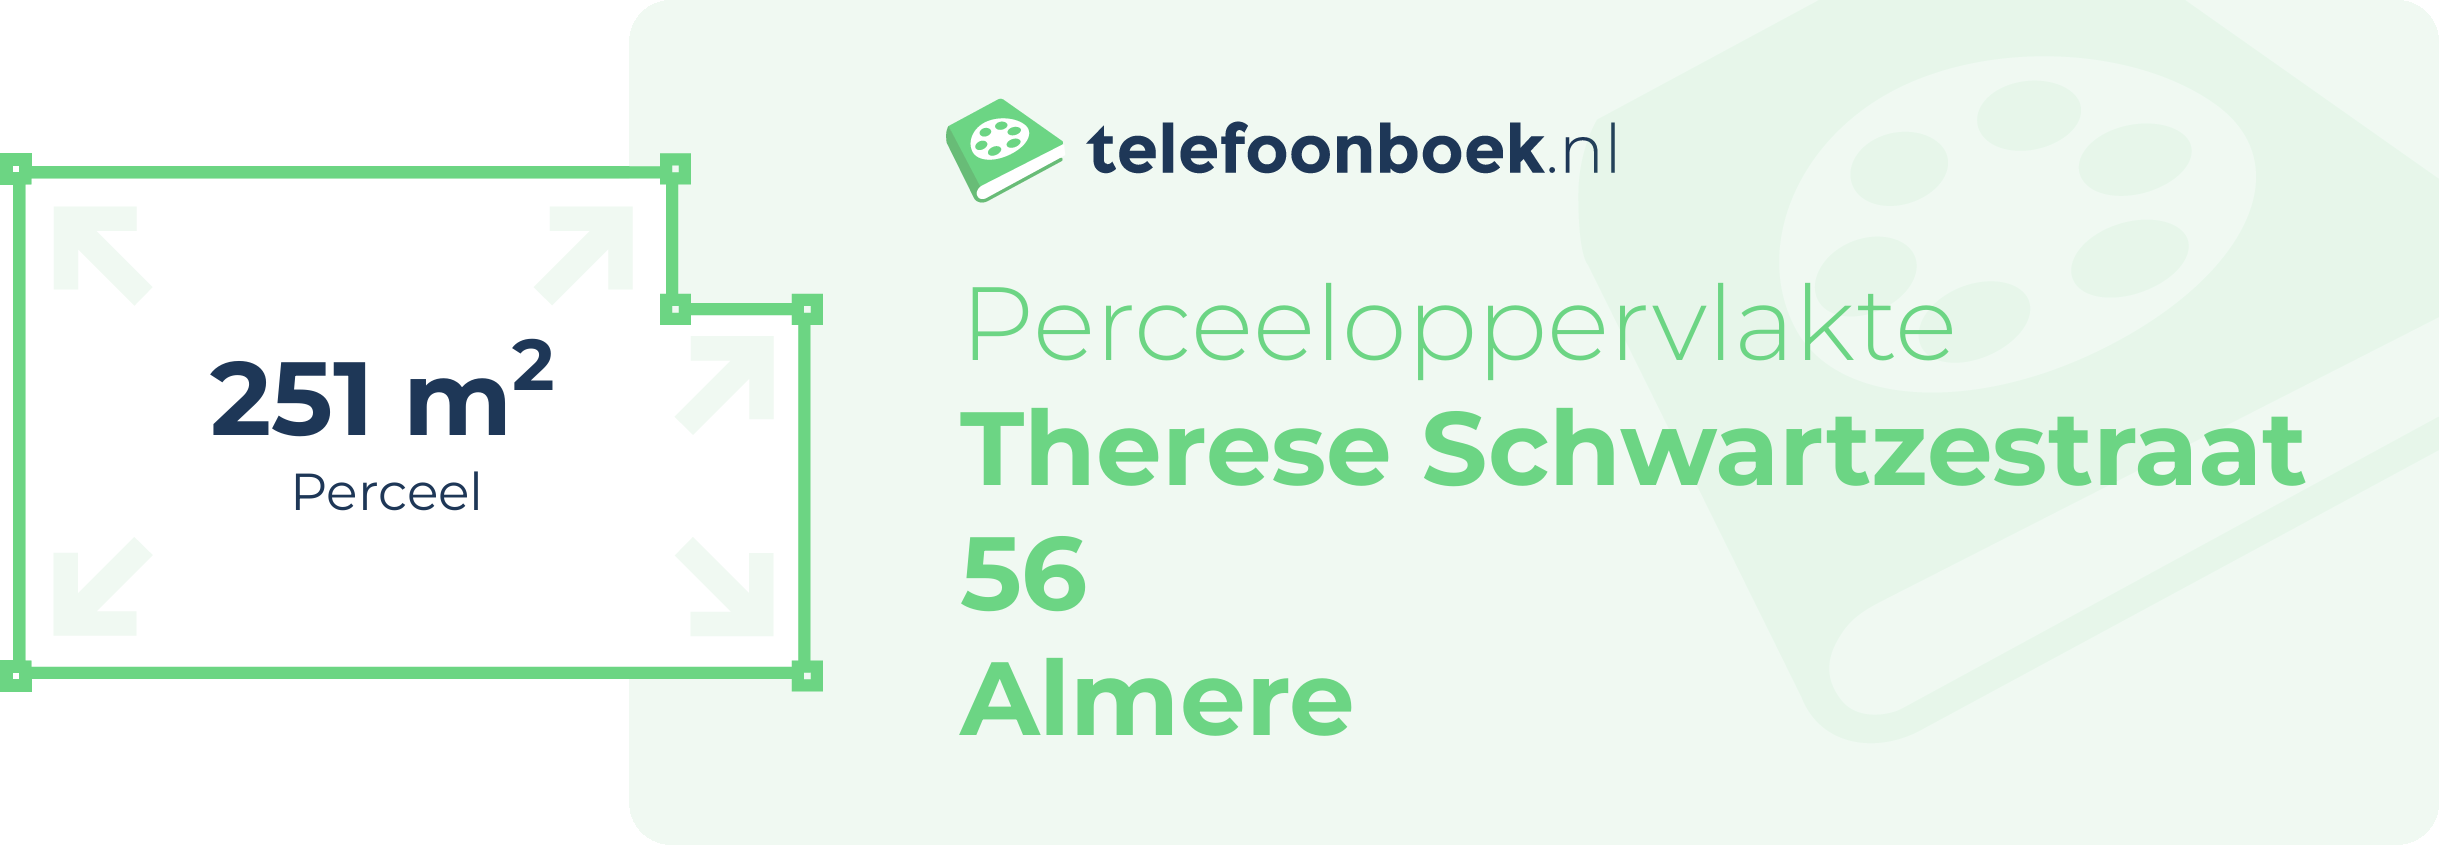 Perceeloppervlakte Therese Schwartzestraat 56 Almere